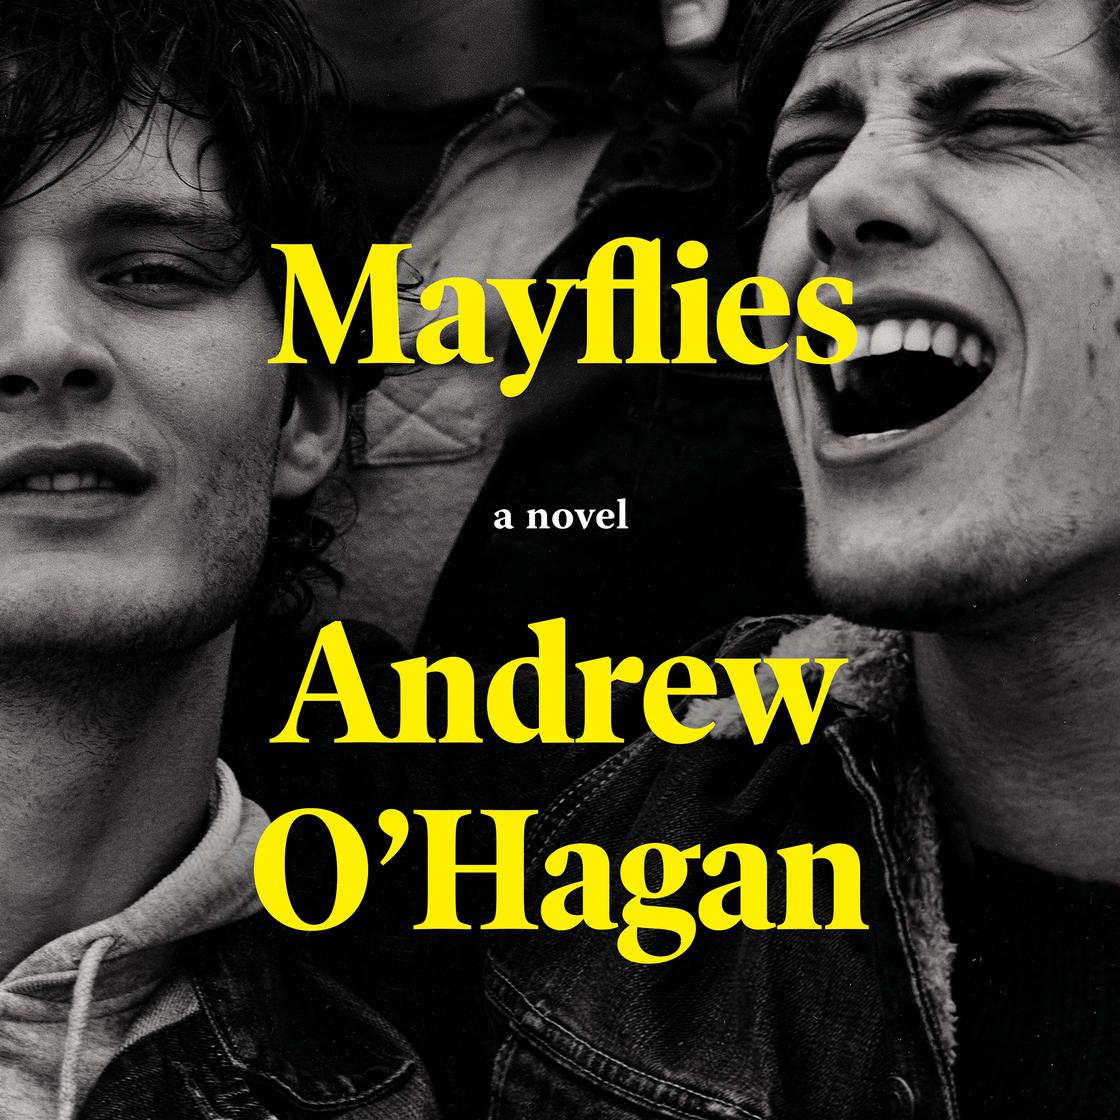 Andrew O'Hagan: Mayflies (AudiobookFormat, 2021, McClelland & Stewart)